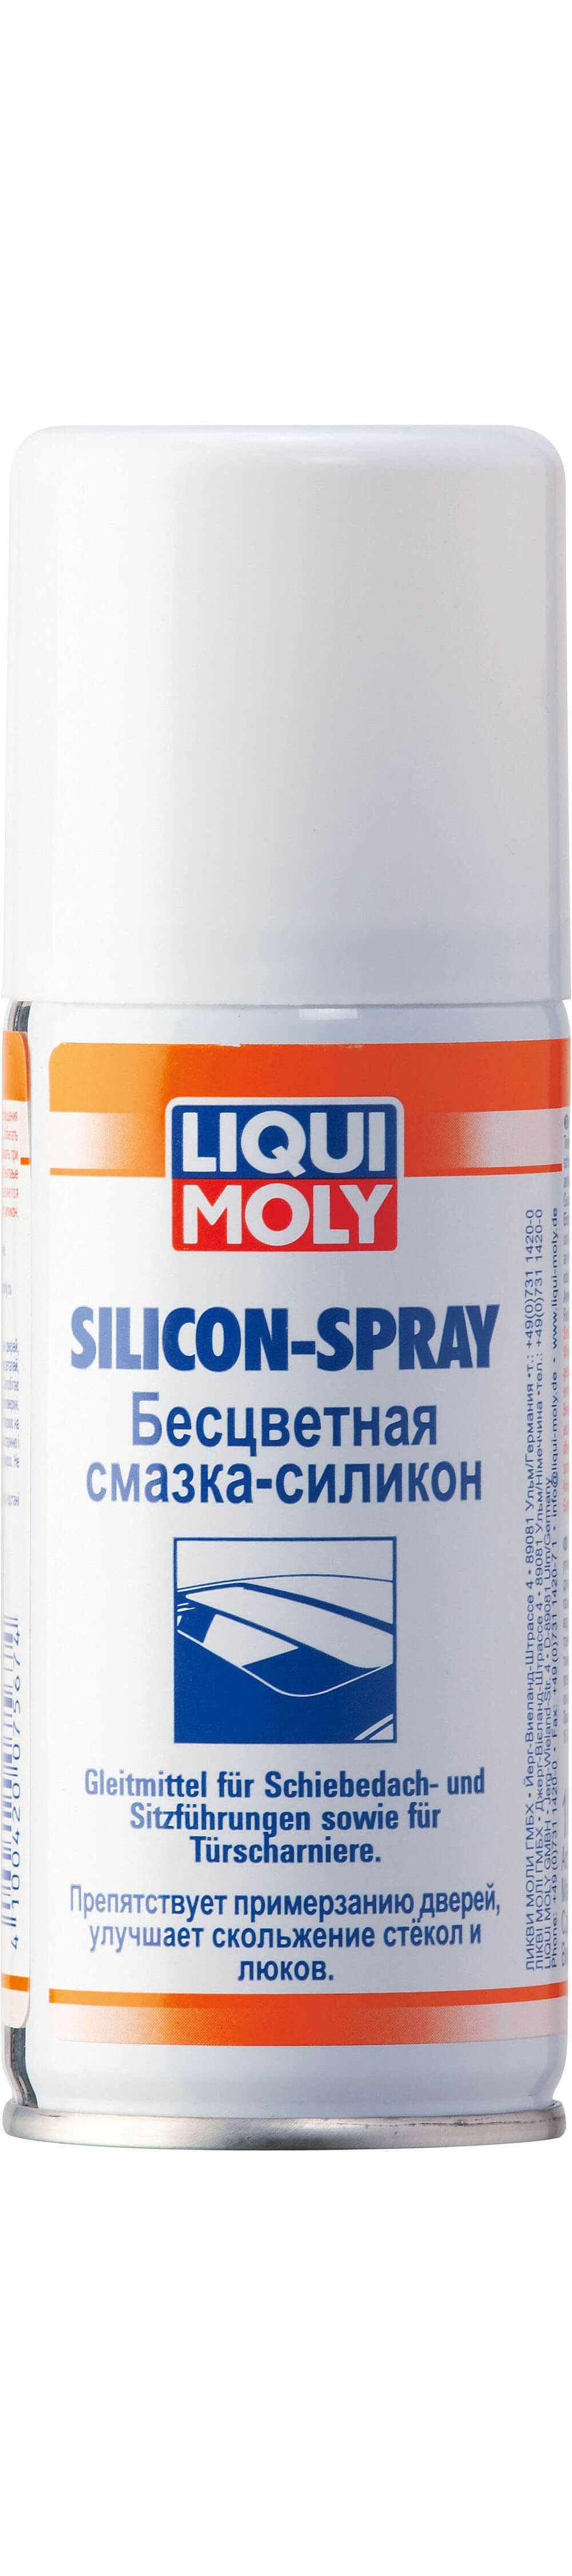 7567 LiquiMoly Бесцветная смазка-силикон Silicon-Spray (0,1л)